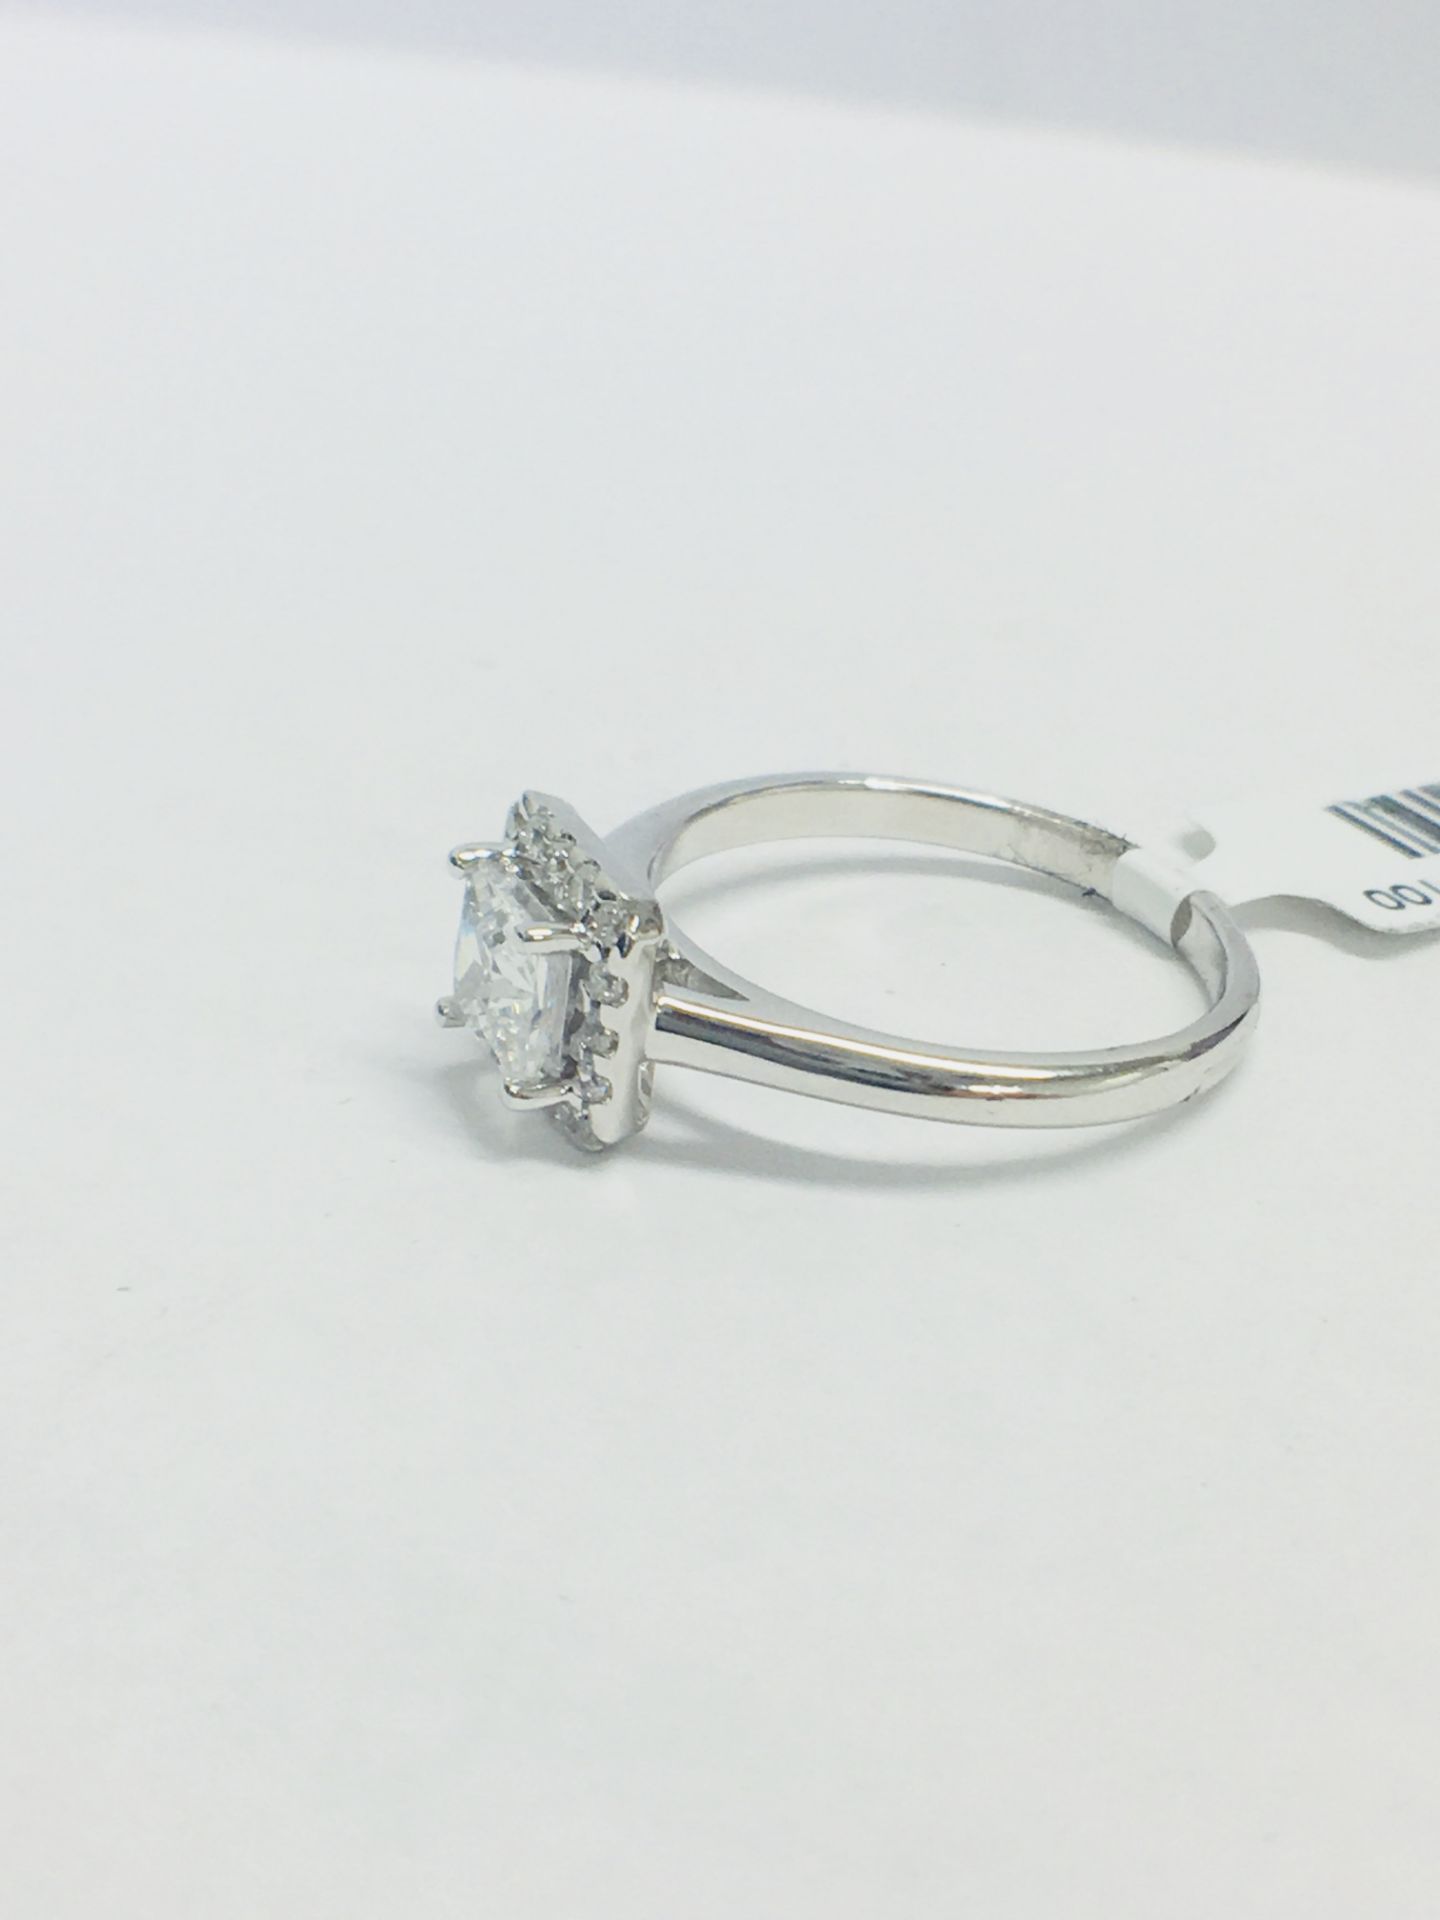 Platinum Princess cut Diamond Ring,1ct Princess cut natural diamond,h colour,si1 clarity,16 round - Image 3 of 8